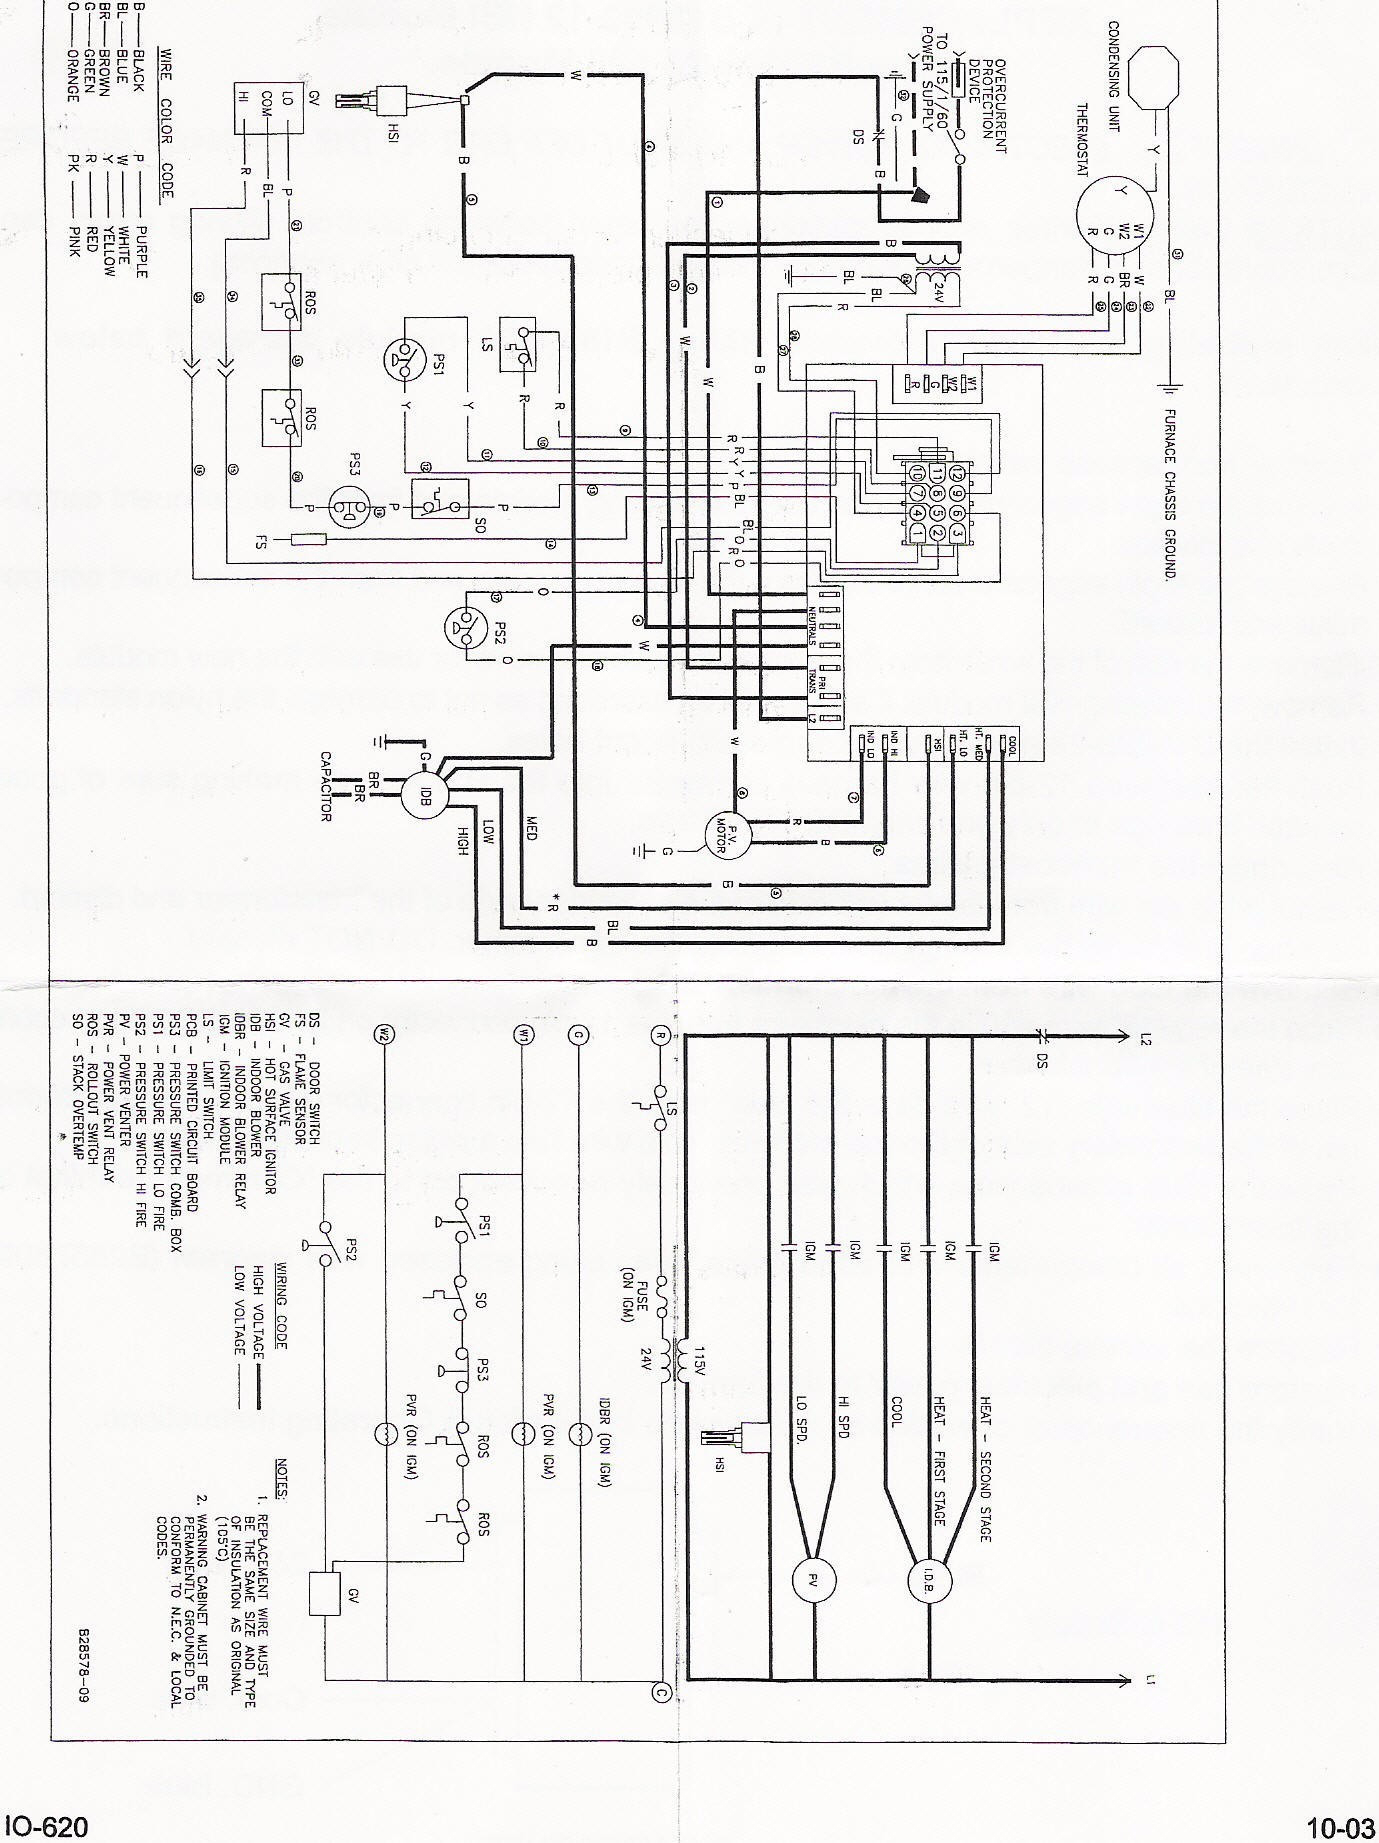 Goodman Package Unit Wiring Diagram | Cadician's Blog